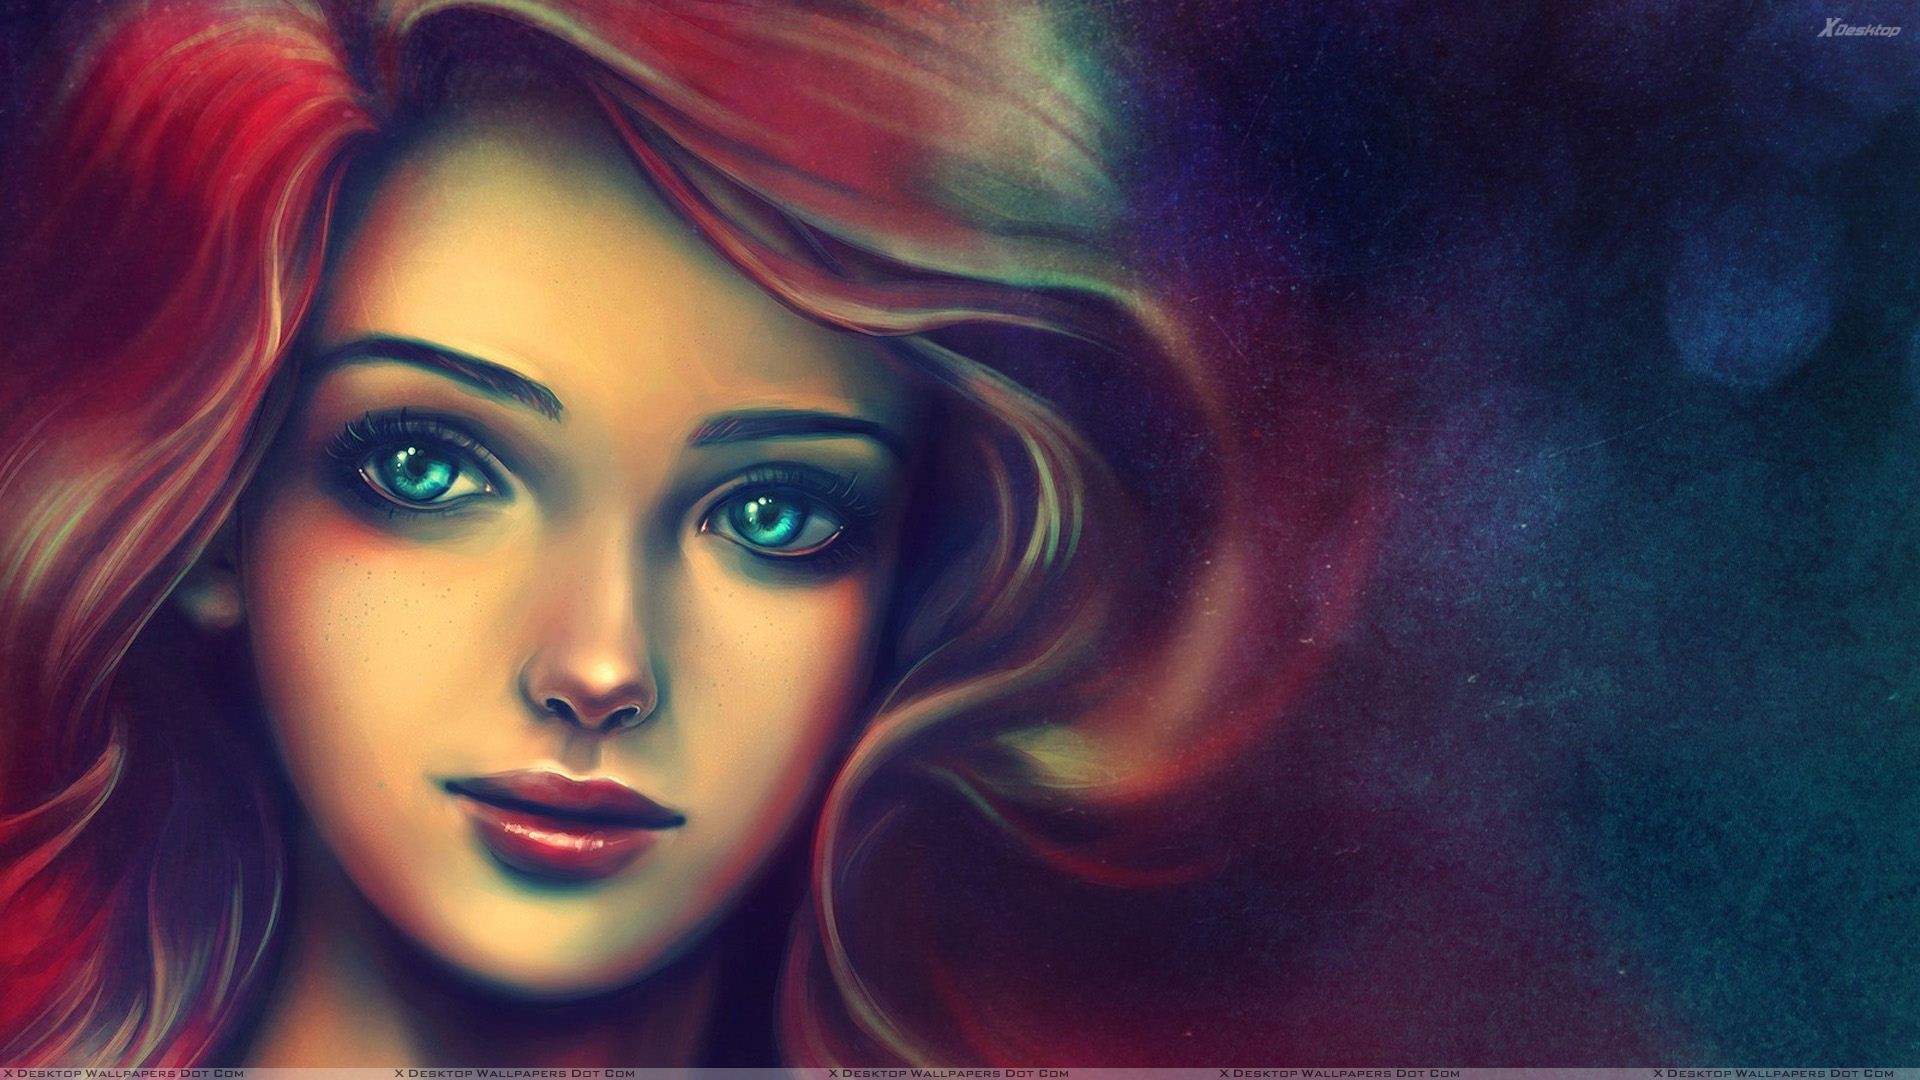 Wallpapers Sketch Beautiful Face Closeup Of A Girl